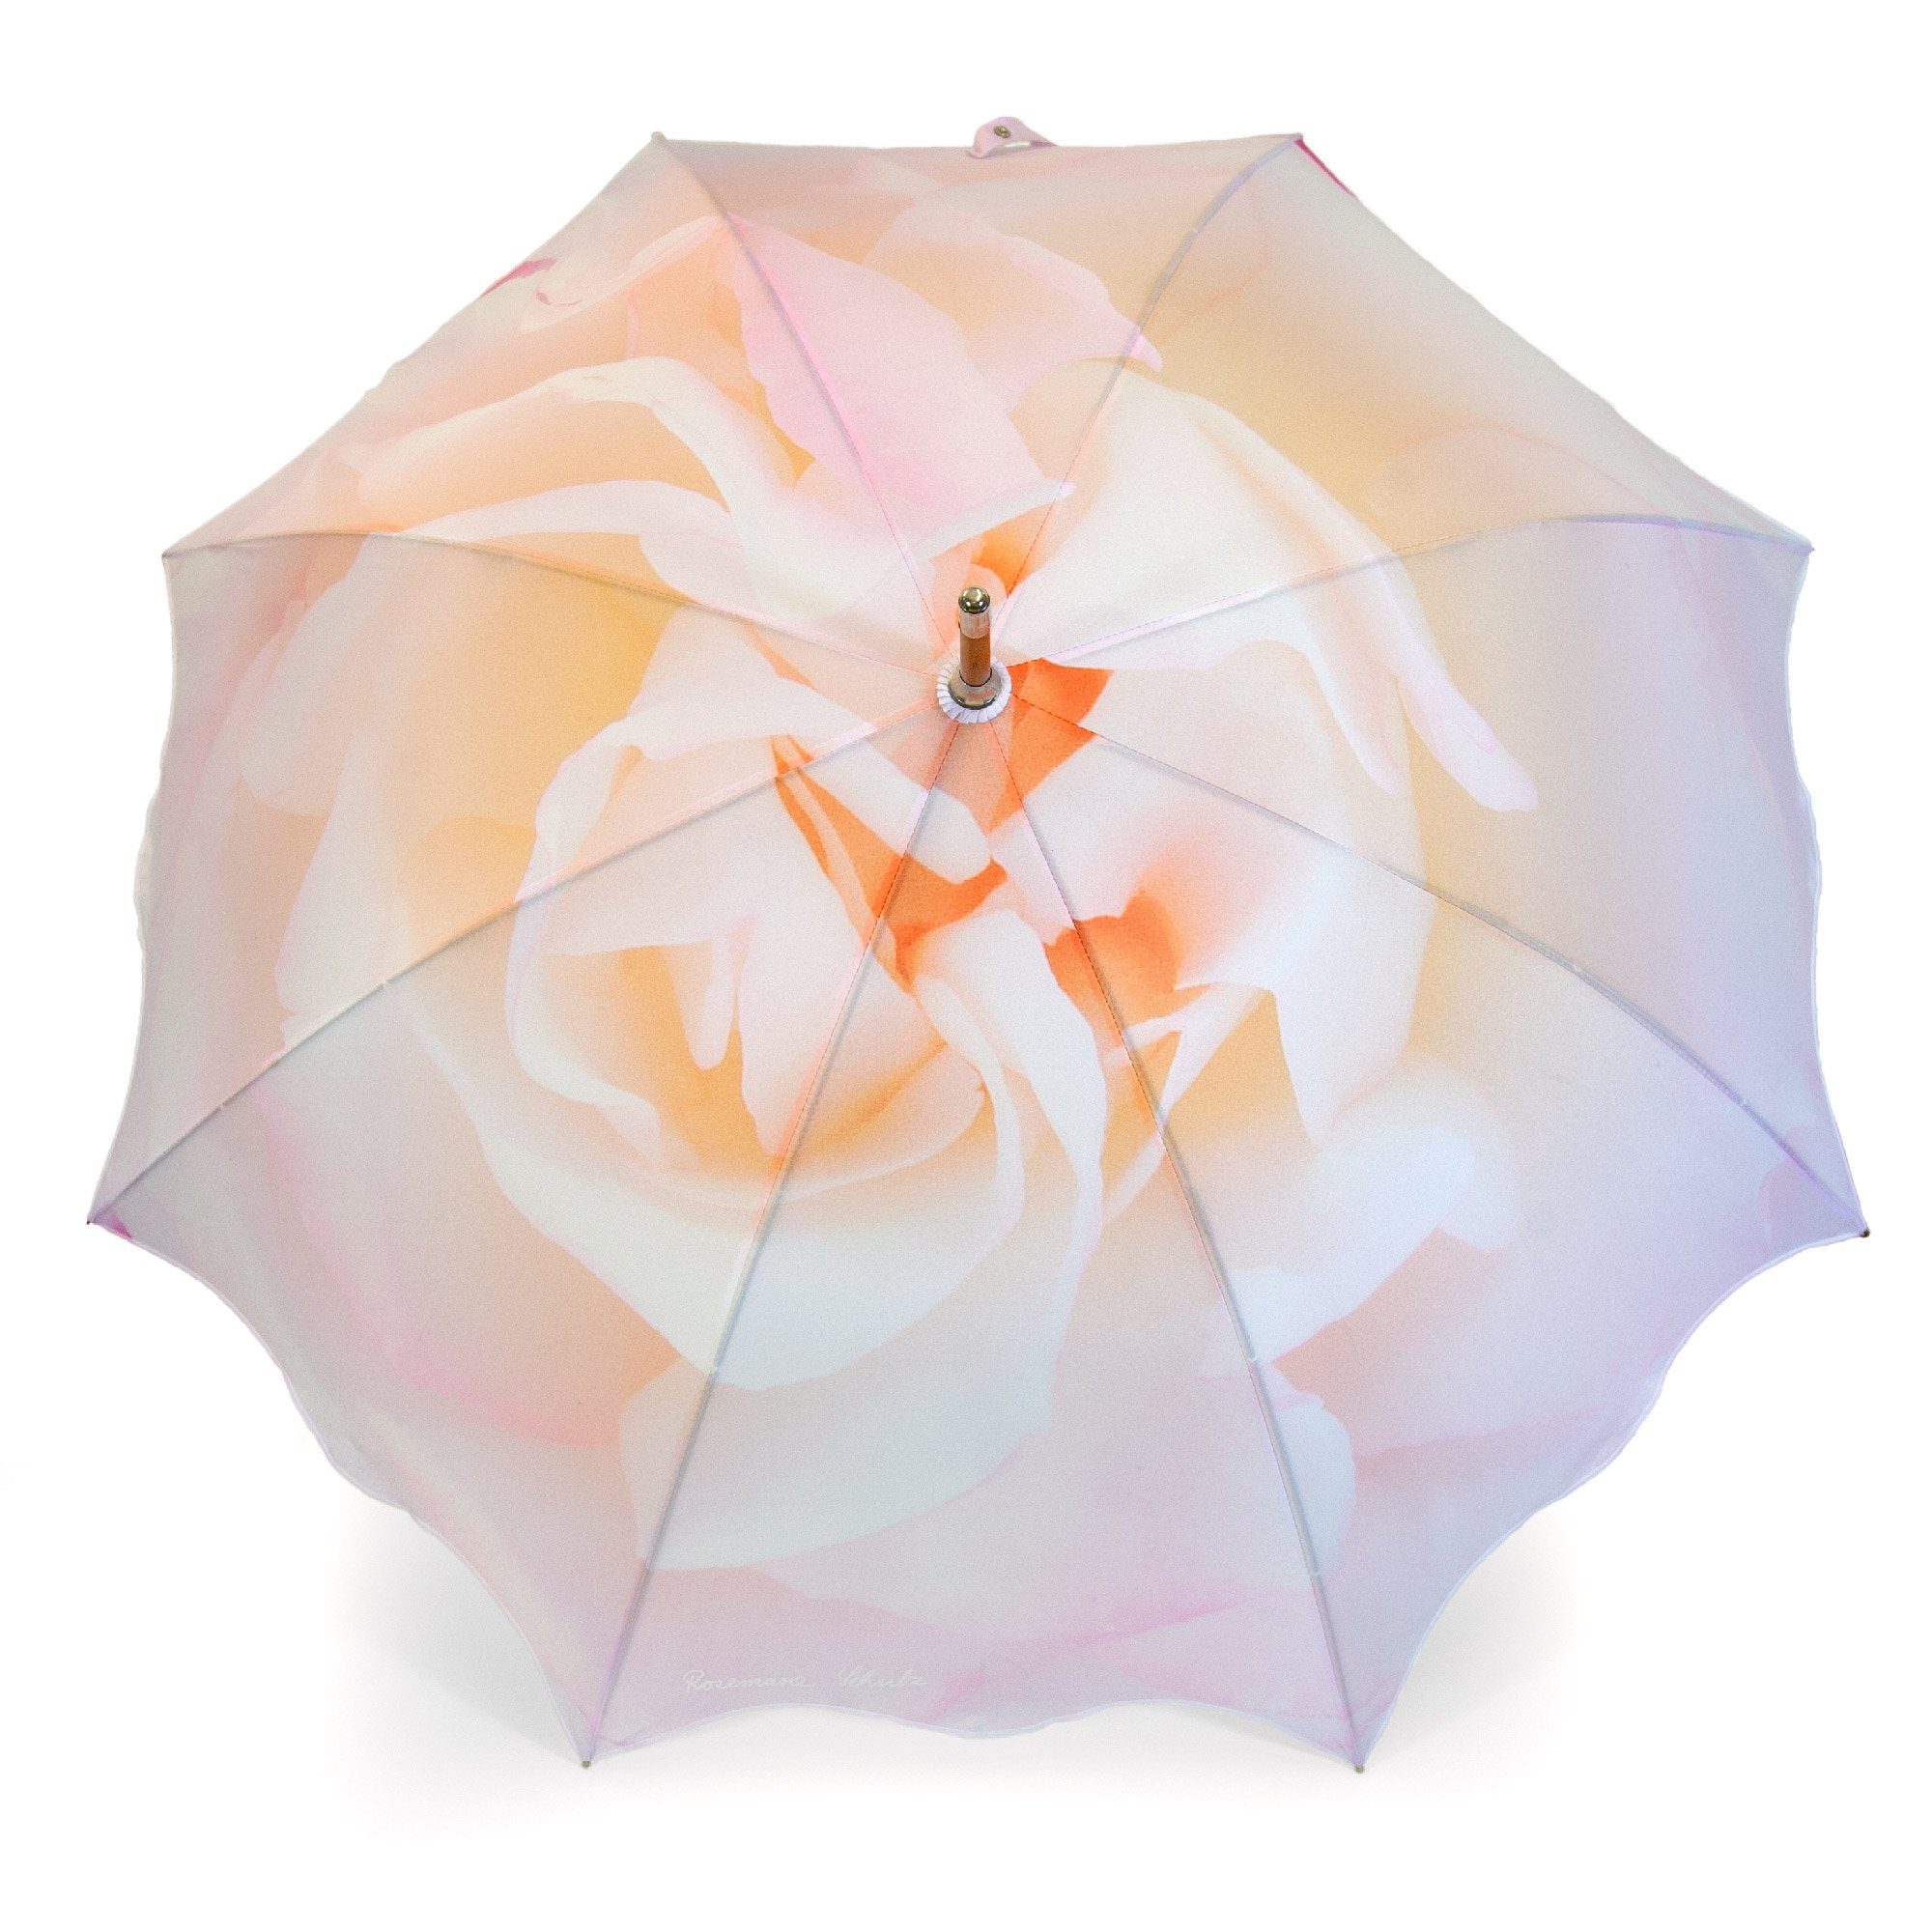 Regenschirm Stockschirm Motiv Rosen Öffnungsautomatik Ledergriff Damenschirm 